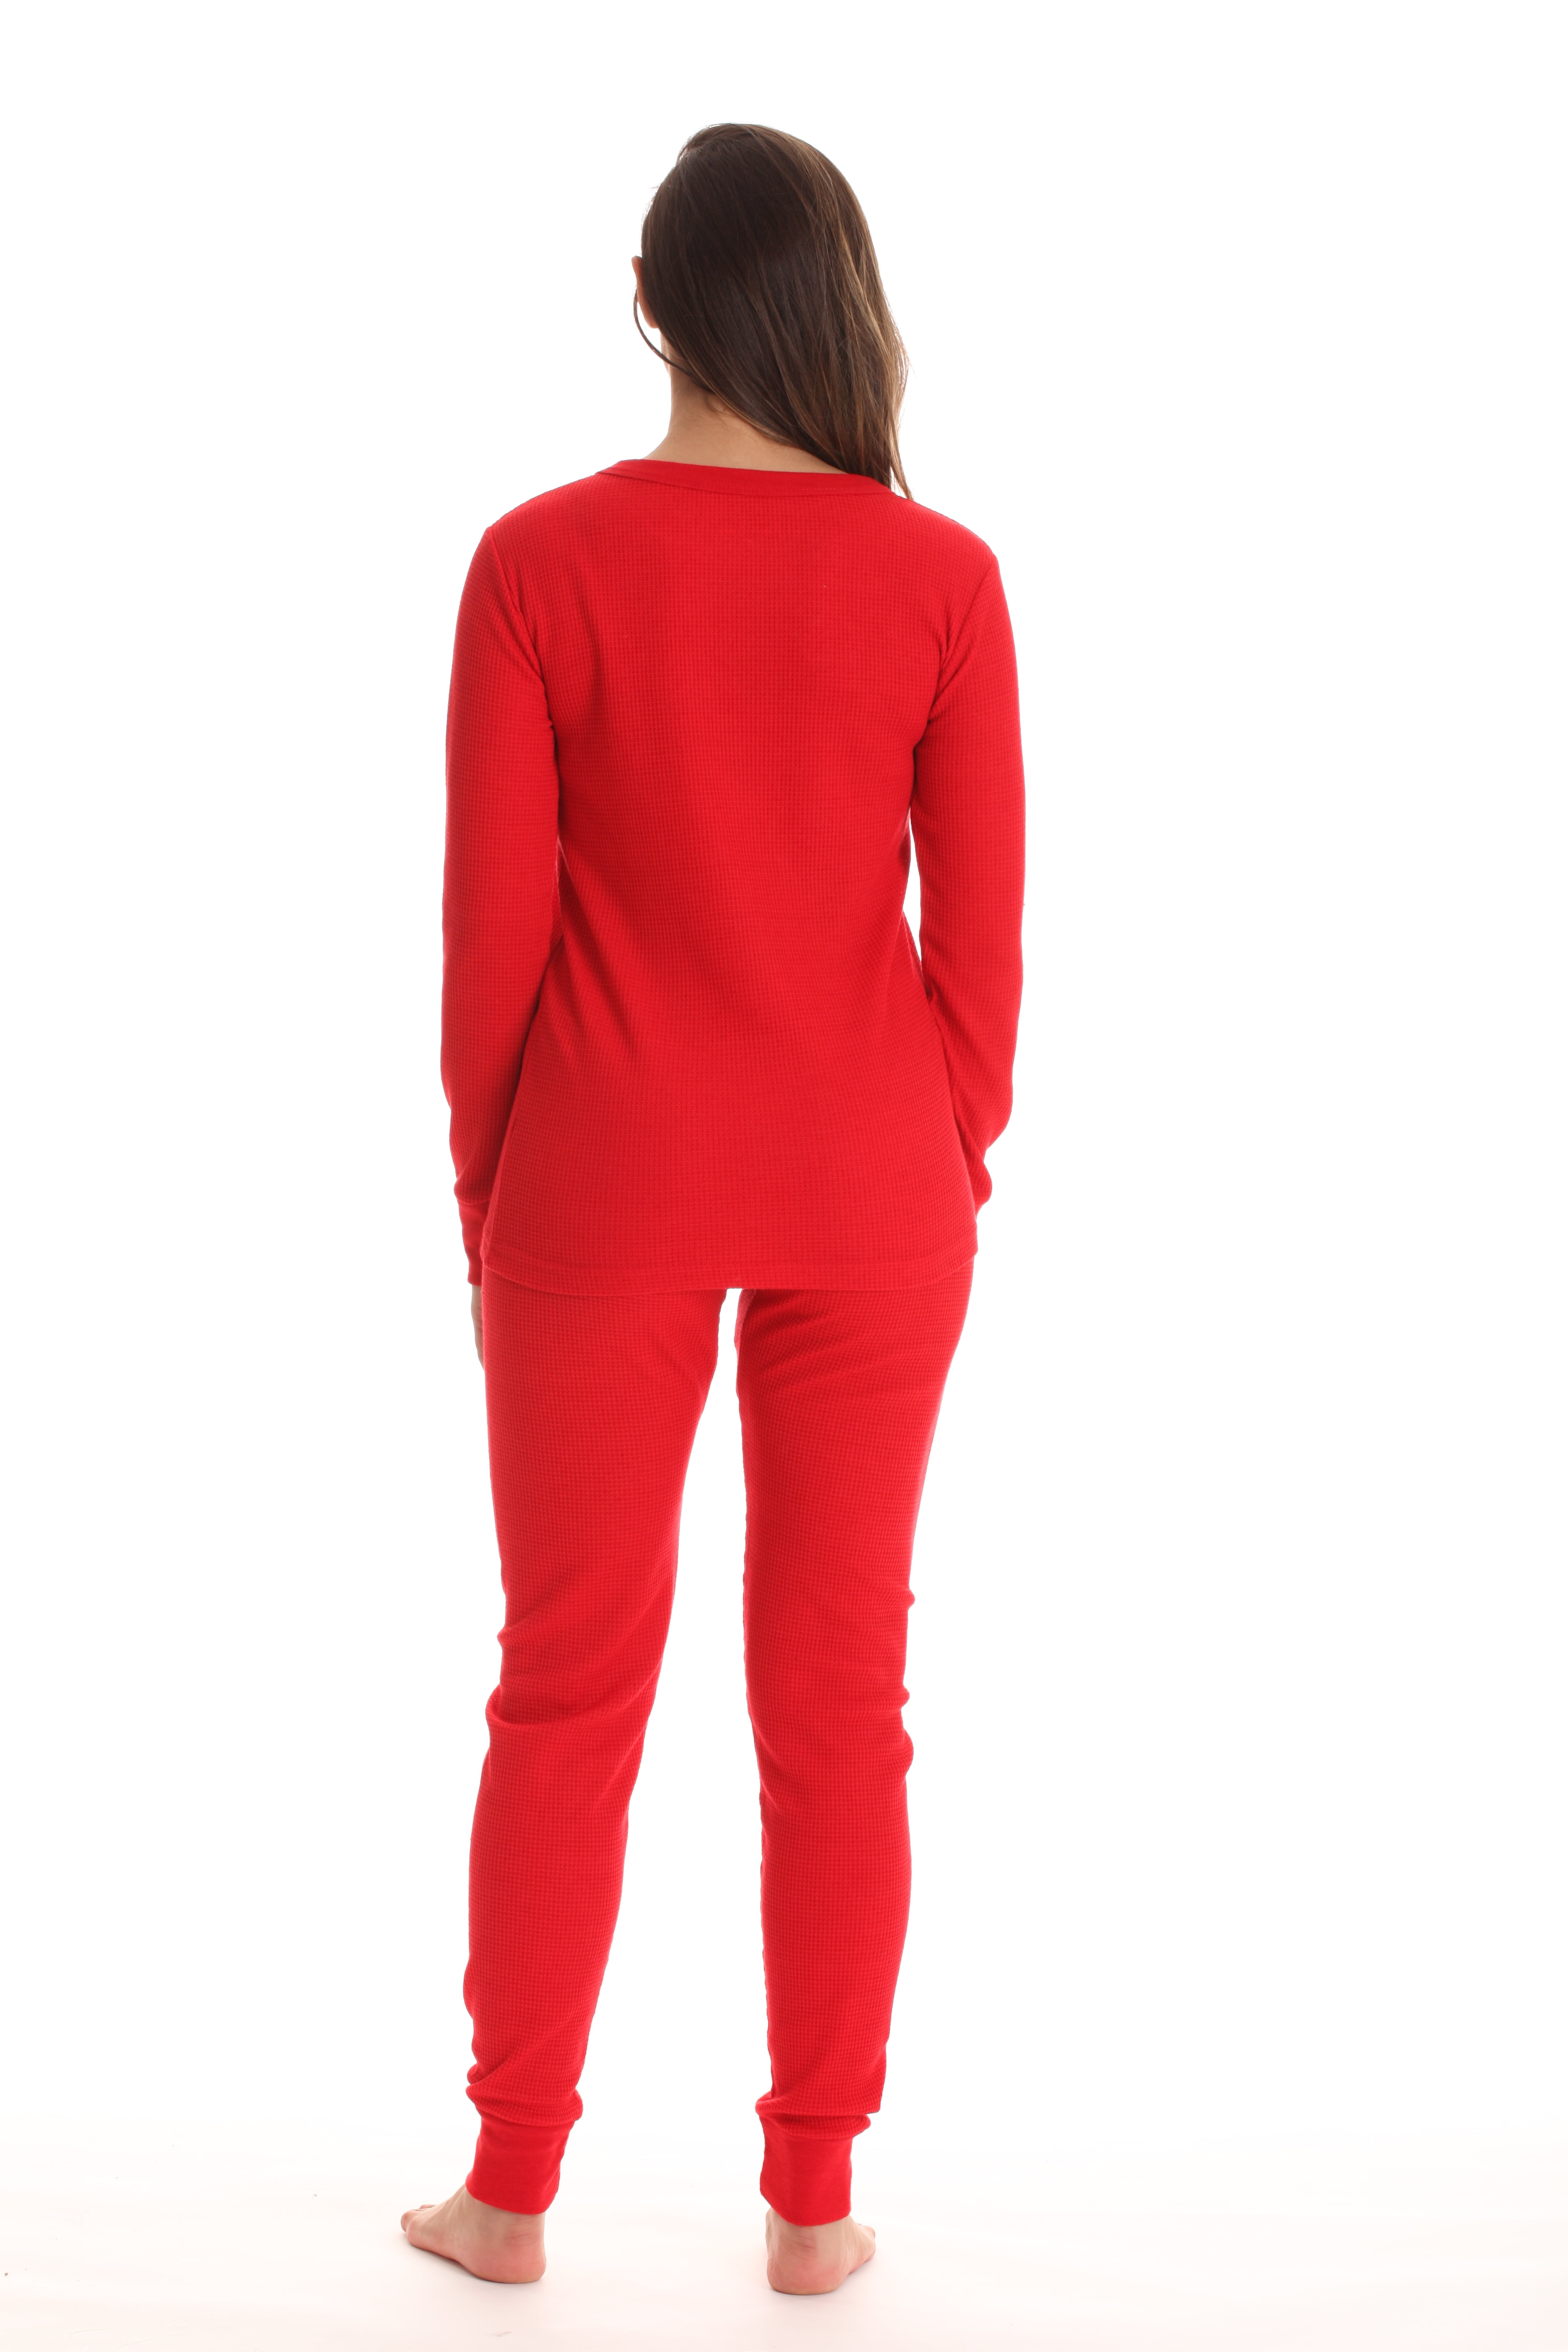 Just Love Women's Thermal Underwear Pajamas Set (Red, 2X Plus